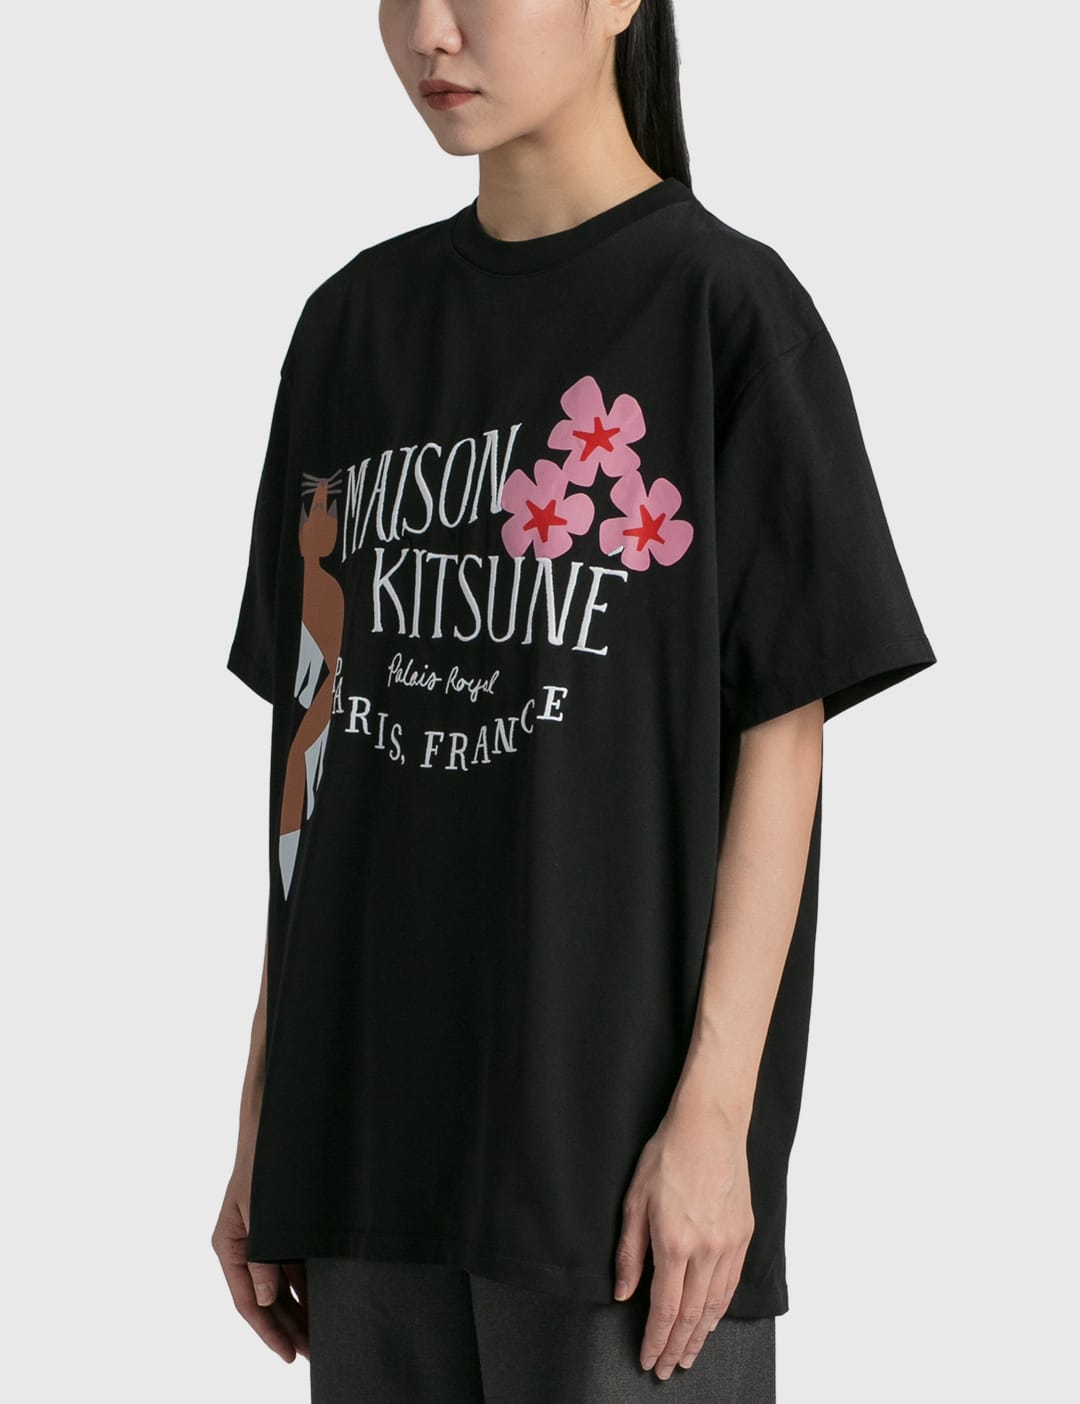 Maison Kitsuné - Bill Rebholz Palais Royal Easy T-Shirt | HBX